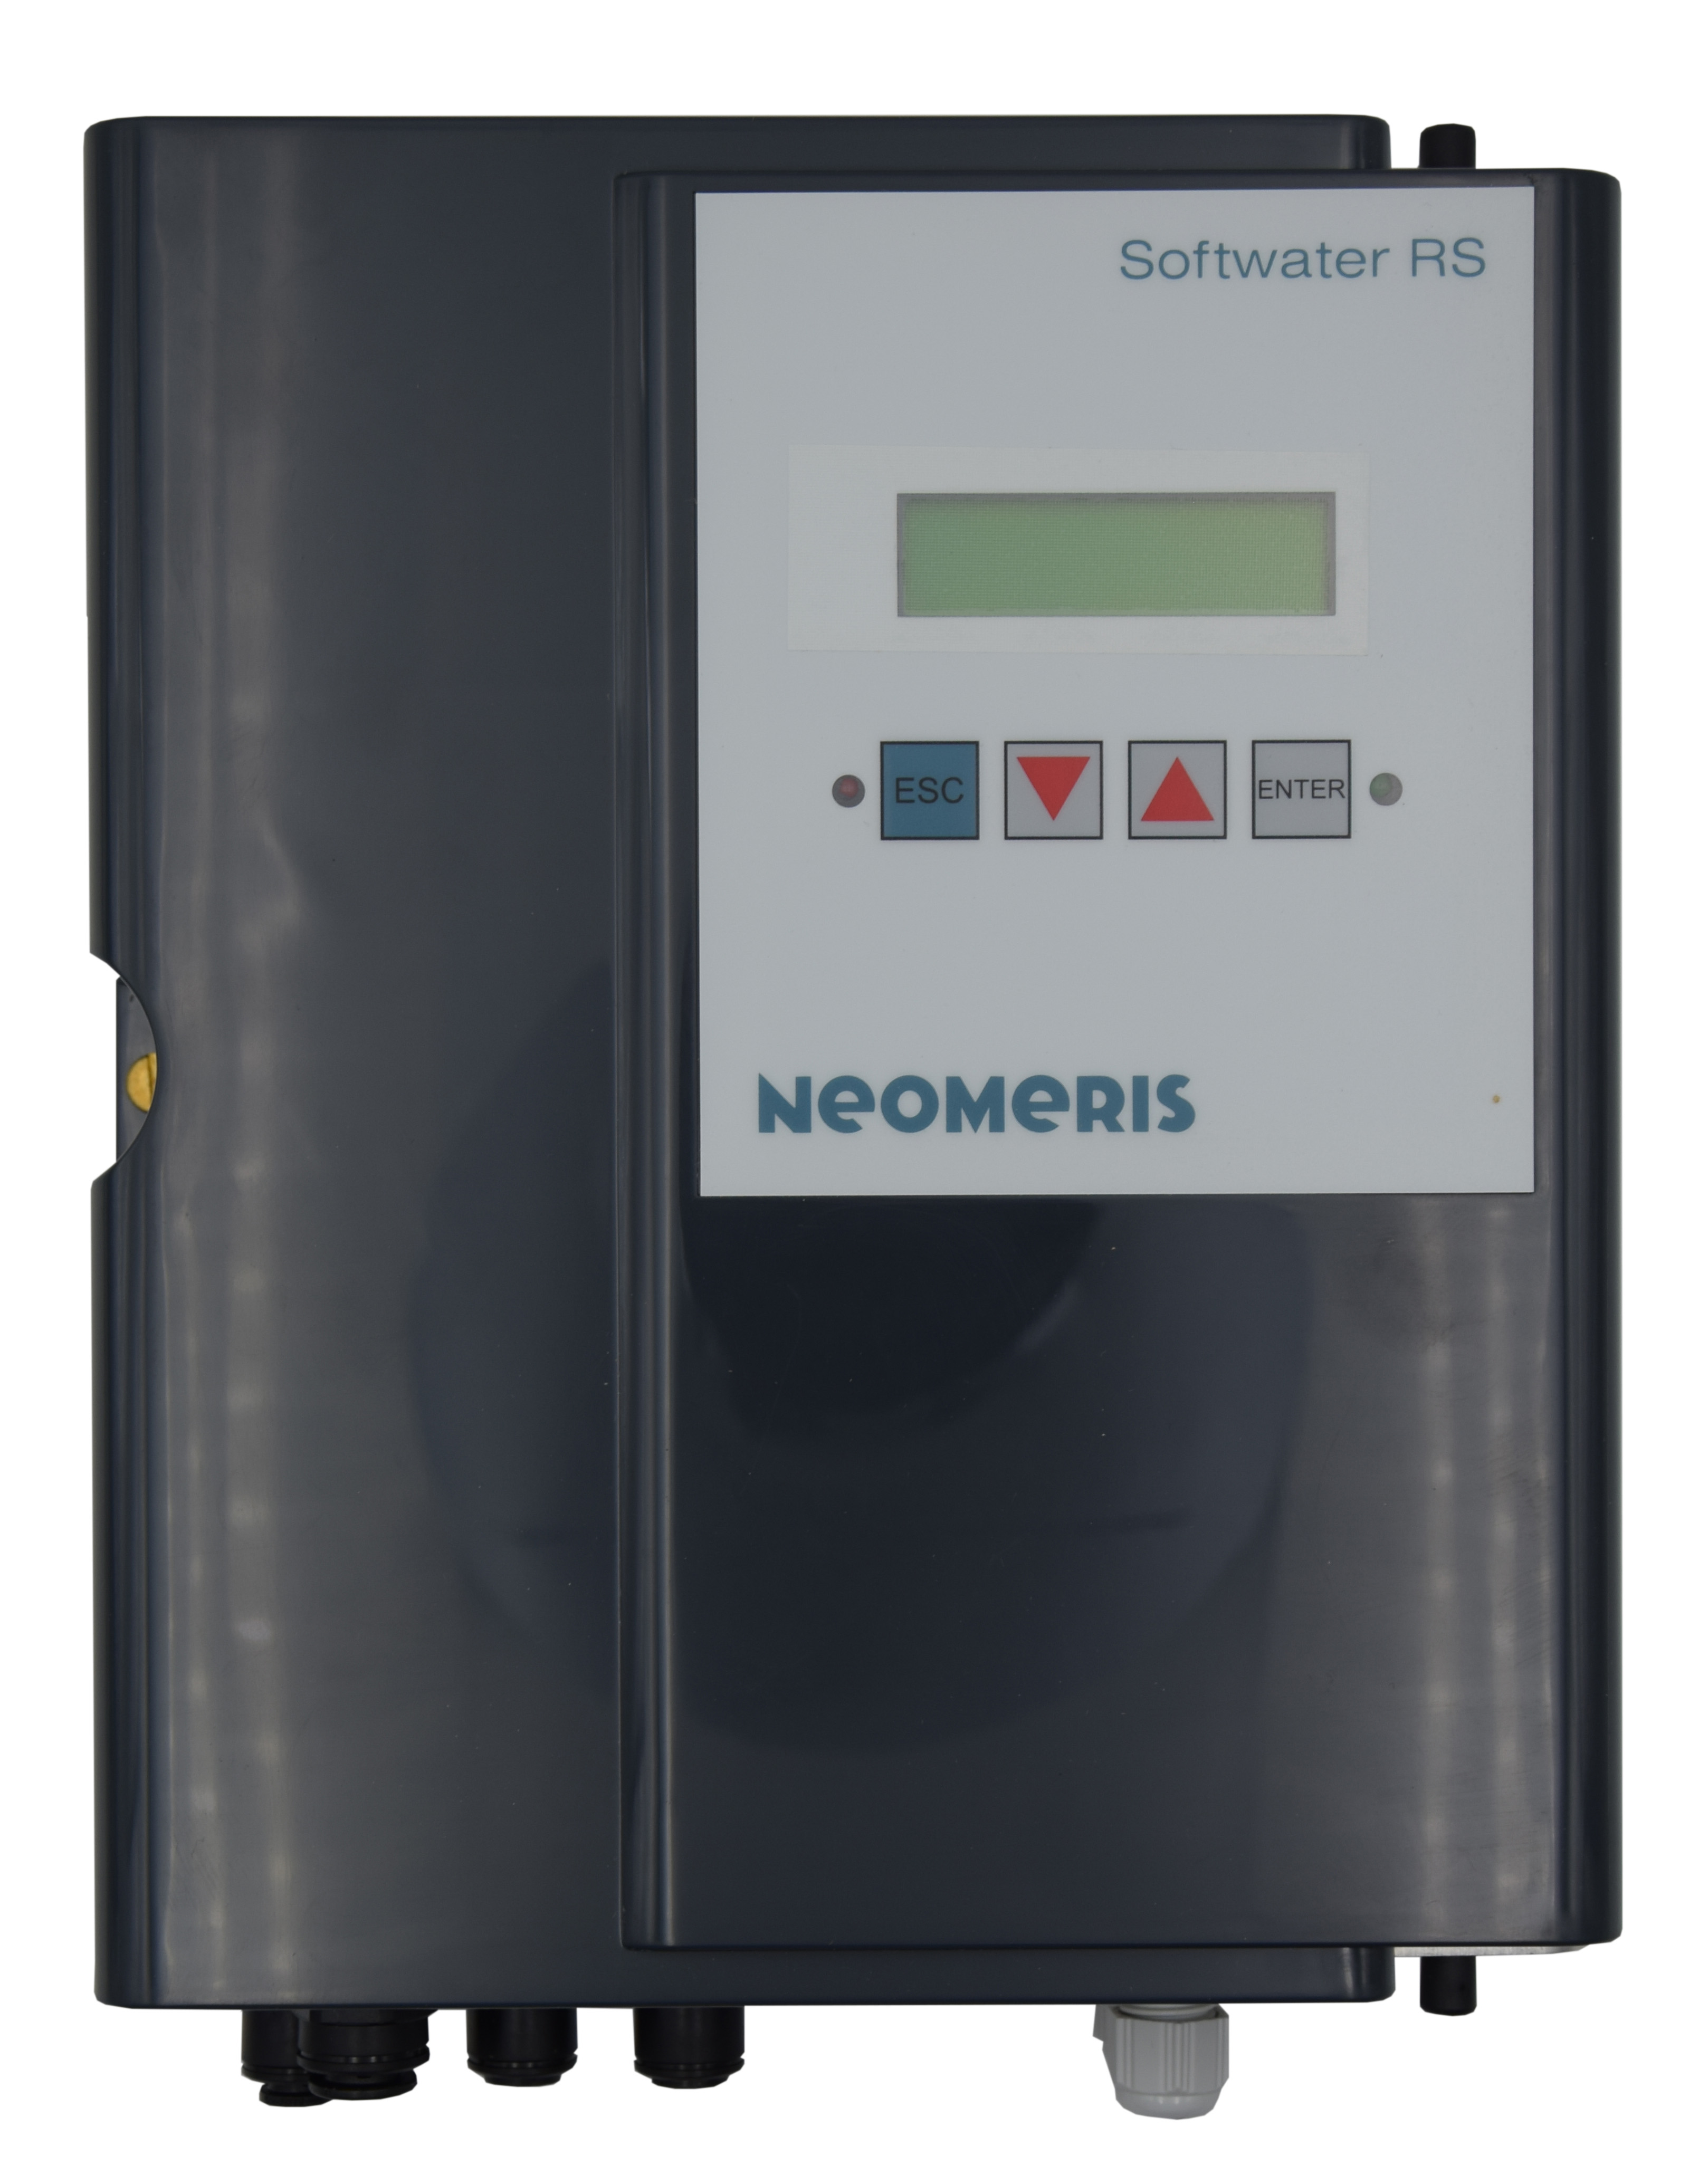 NEOMERIS Softwater RS (Resin Sensor) - Angebotspreis!